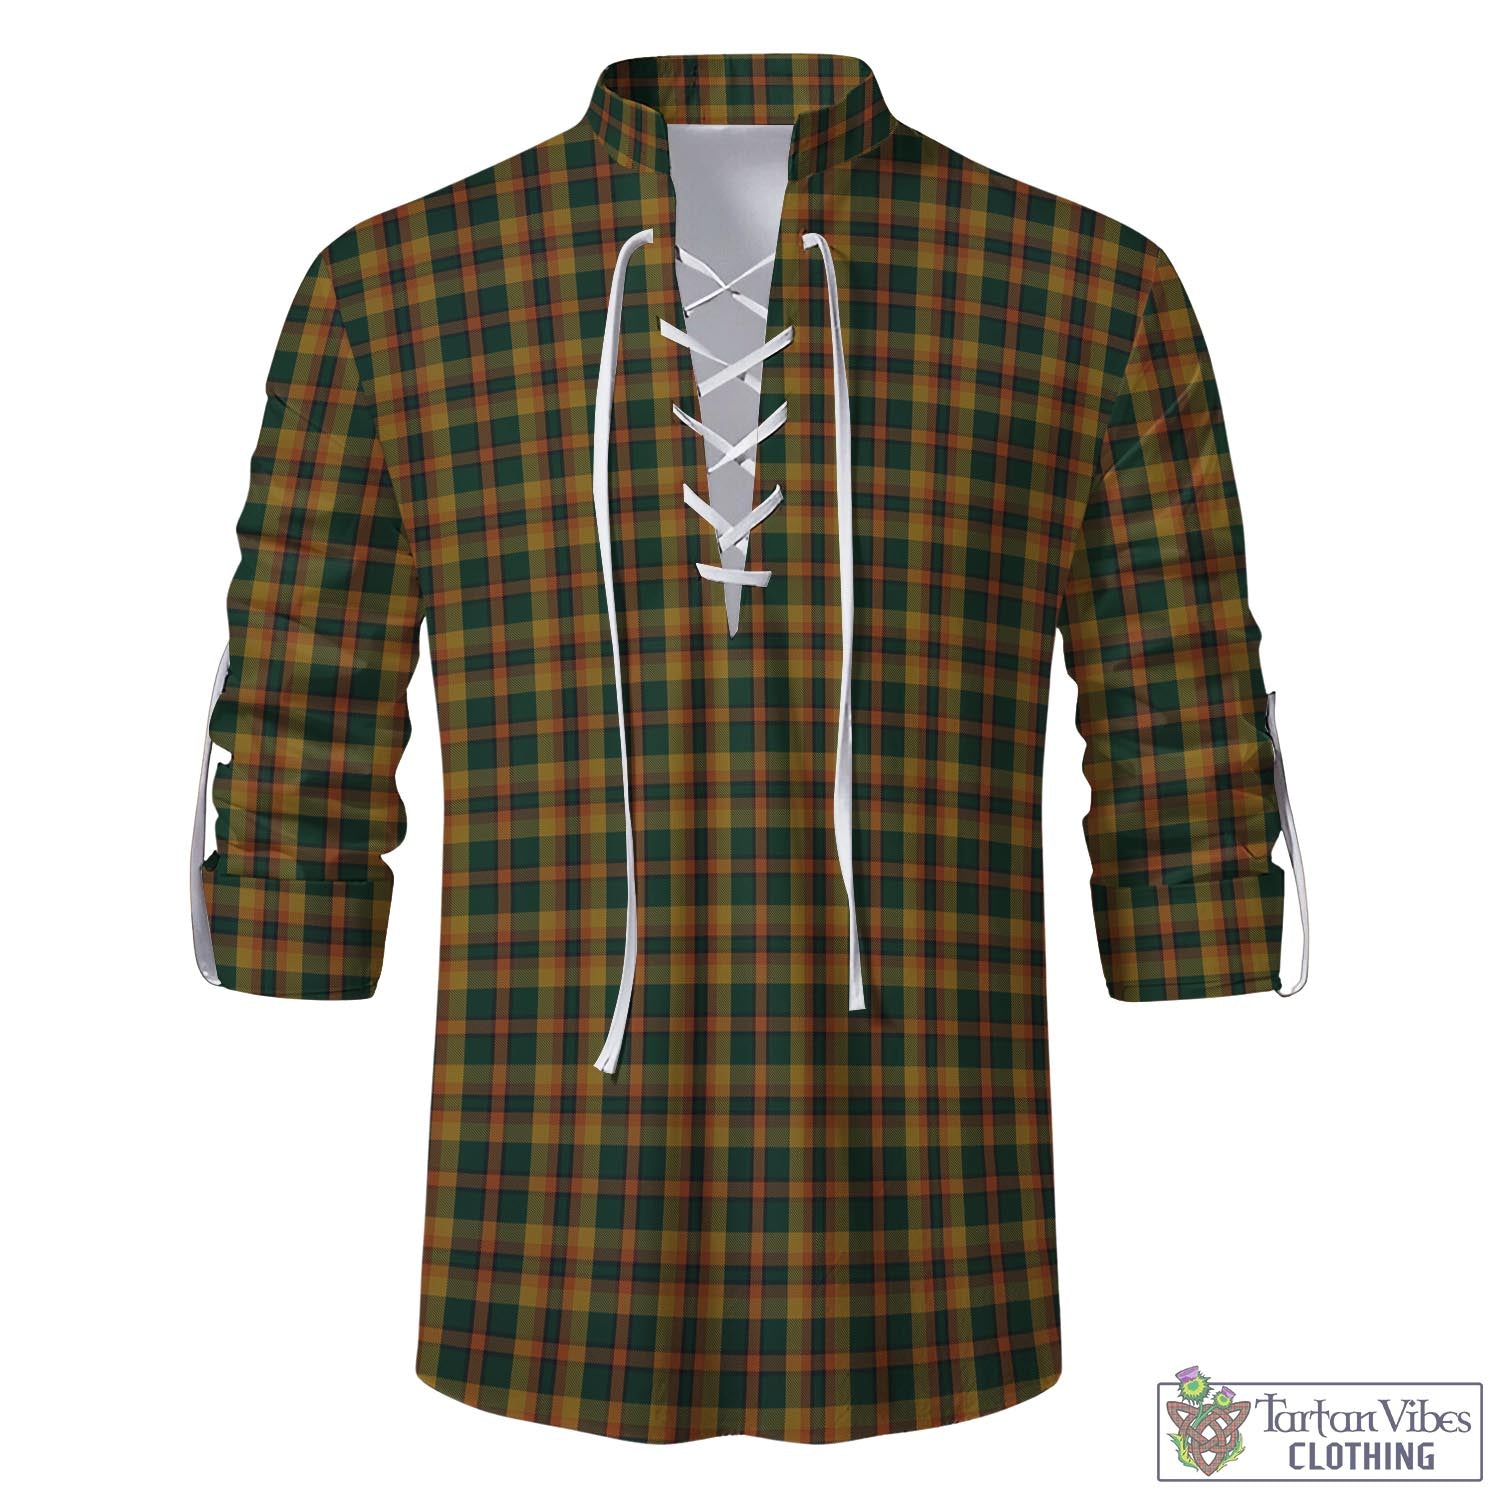 Tartan Vibes Clothing Londonderry (Derry) County Ireland Tartan Men's Scottish Traditional Jacobite Ghillie Kilt Shirt